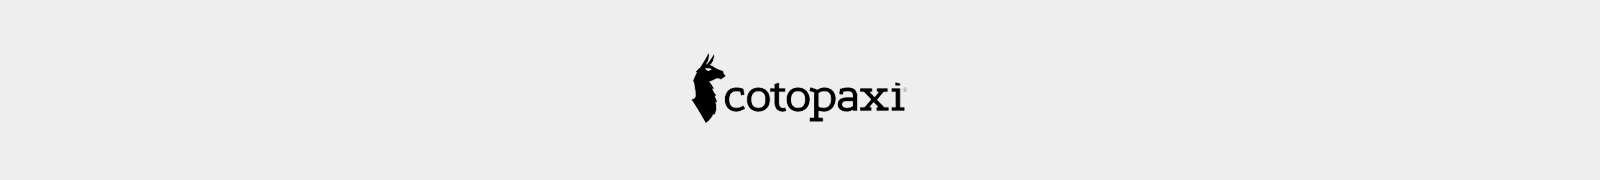 Cotopaxi header image